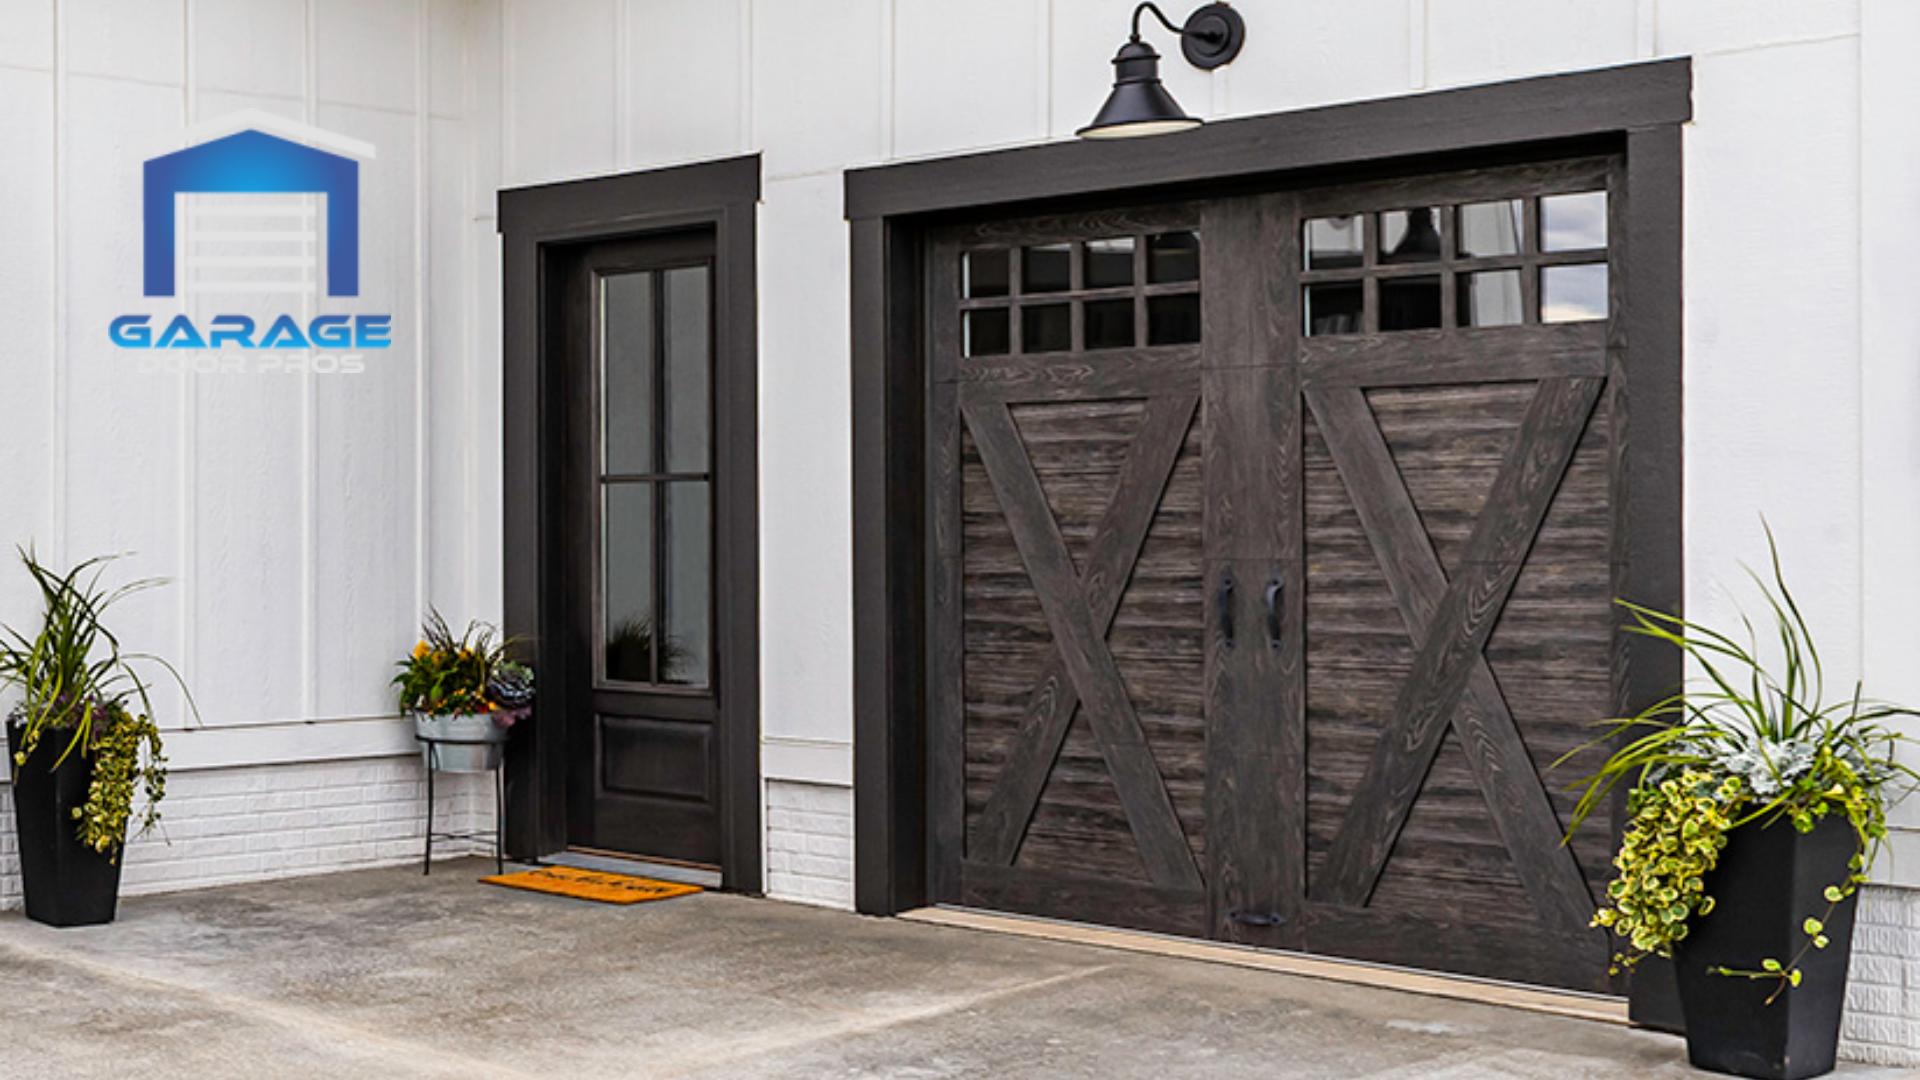 Designing Artistic Garage Doors